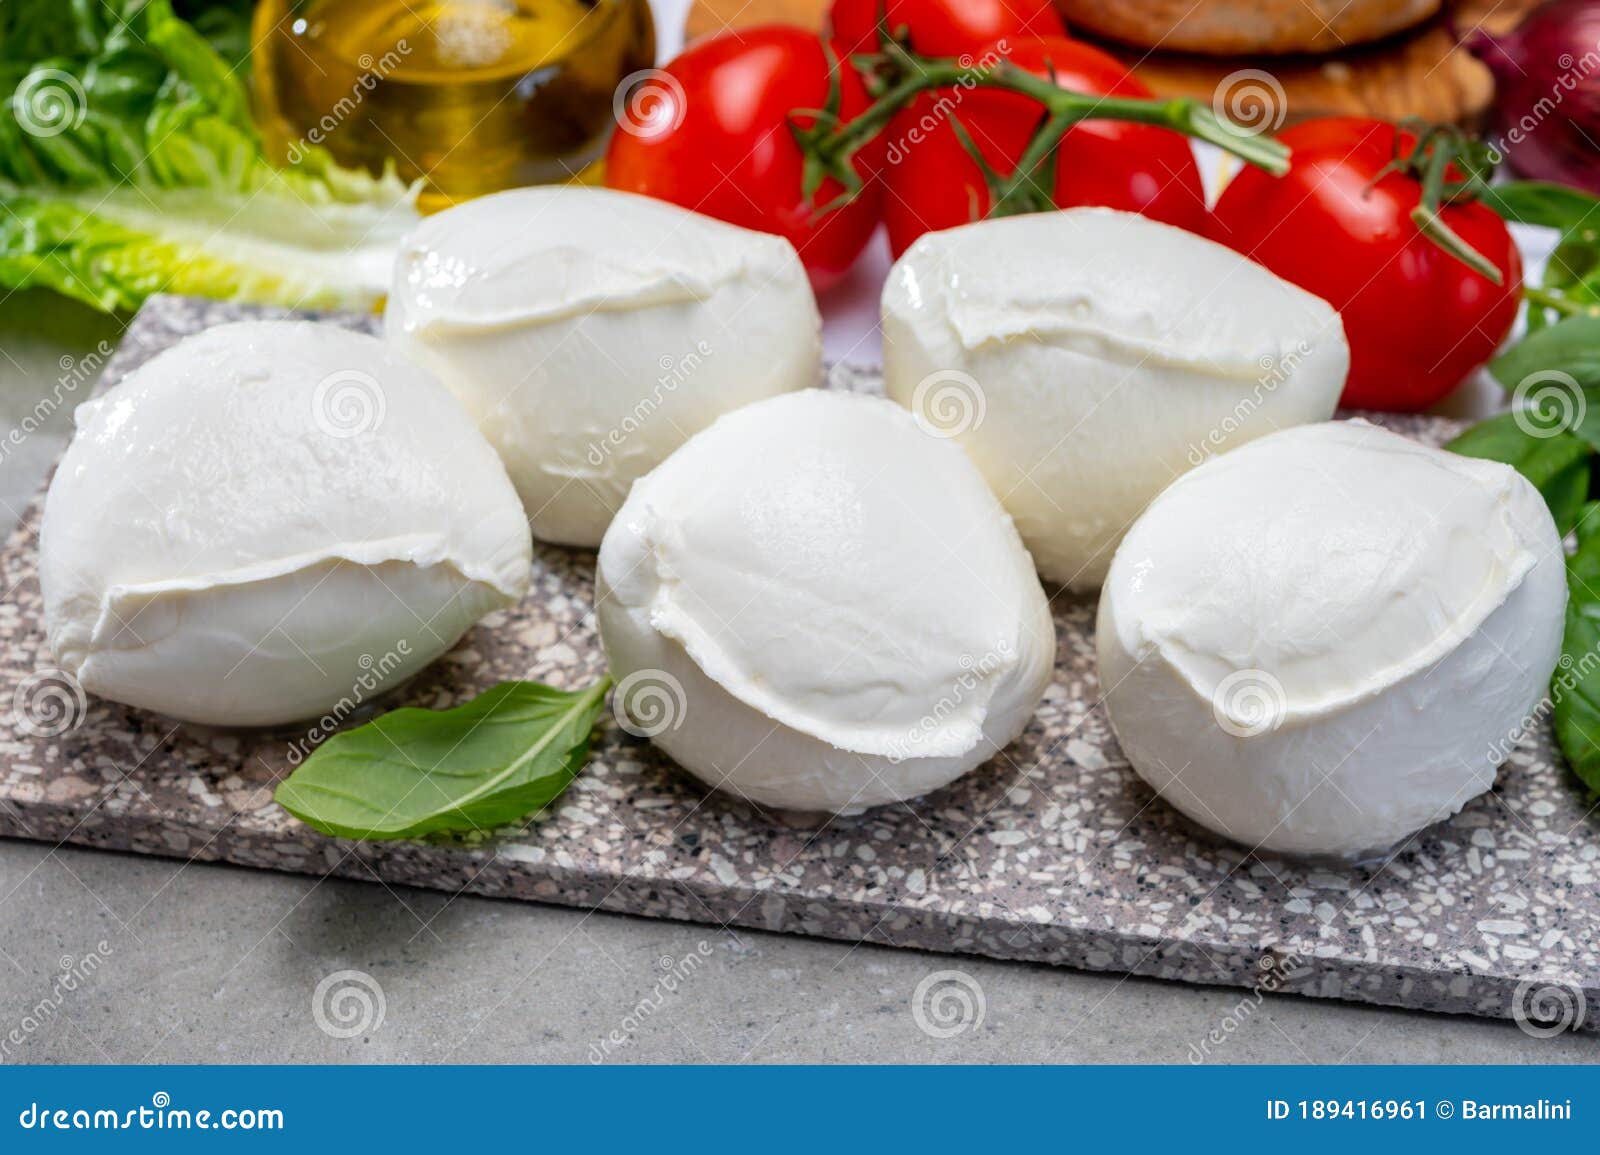 Fresh Handmade Soft Cheese from Campania, White Balls of Buffalo Mozzarella Cheese Made from Cow Milk Ready To Eat Stock Image - Image of farm, caprese: 189416961